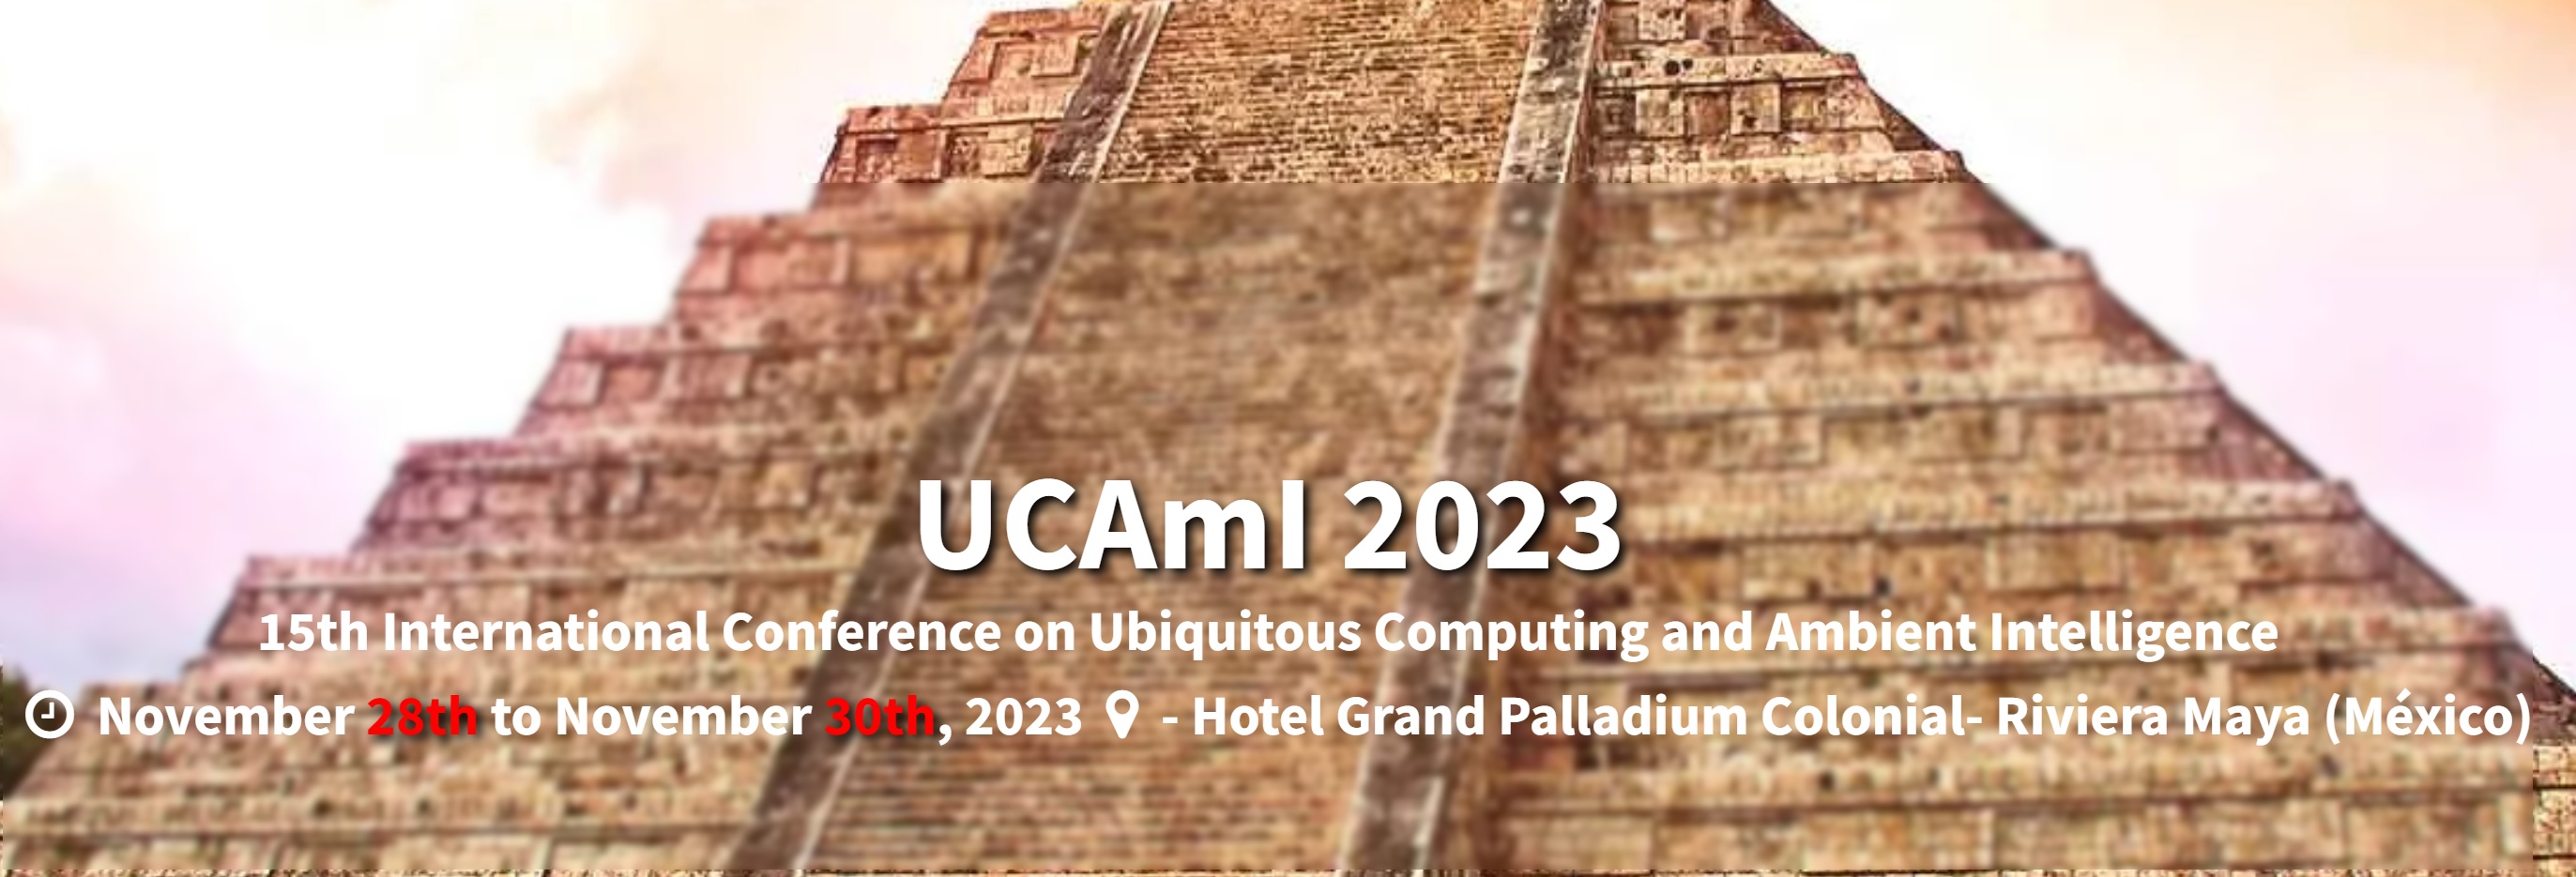 UCAmI Conference 2023